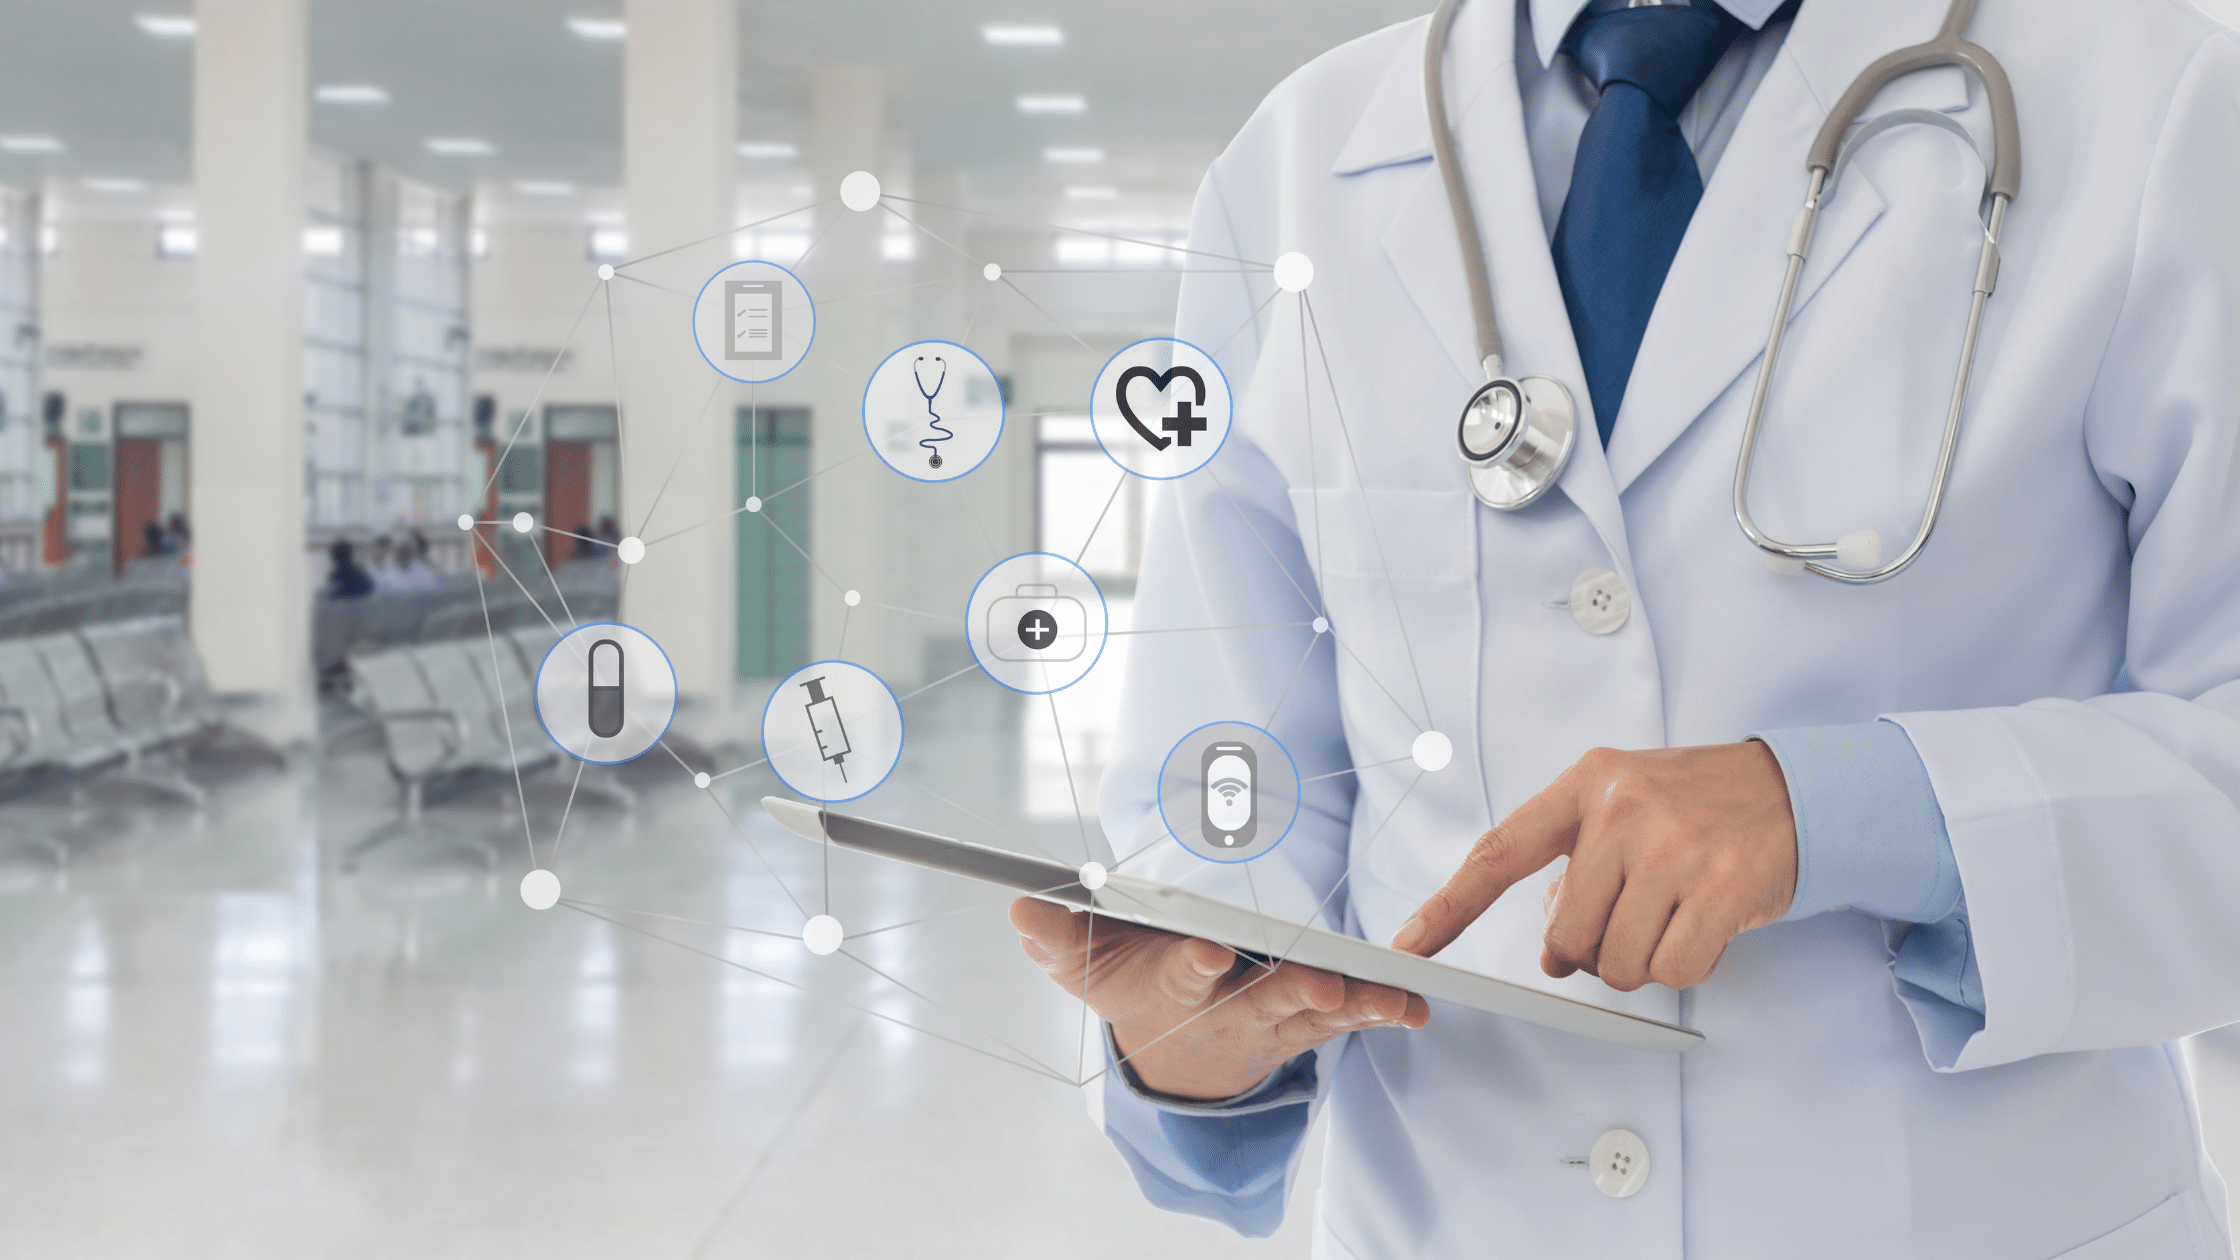 The healthcare digital marketing checklist